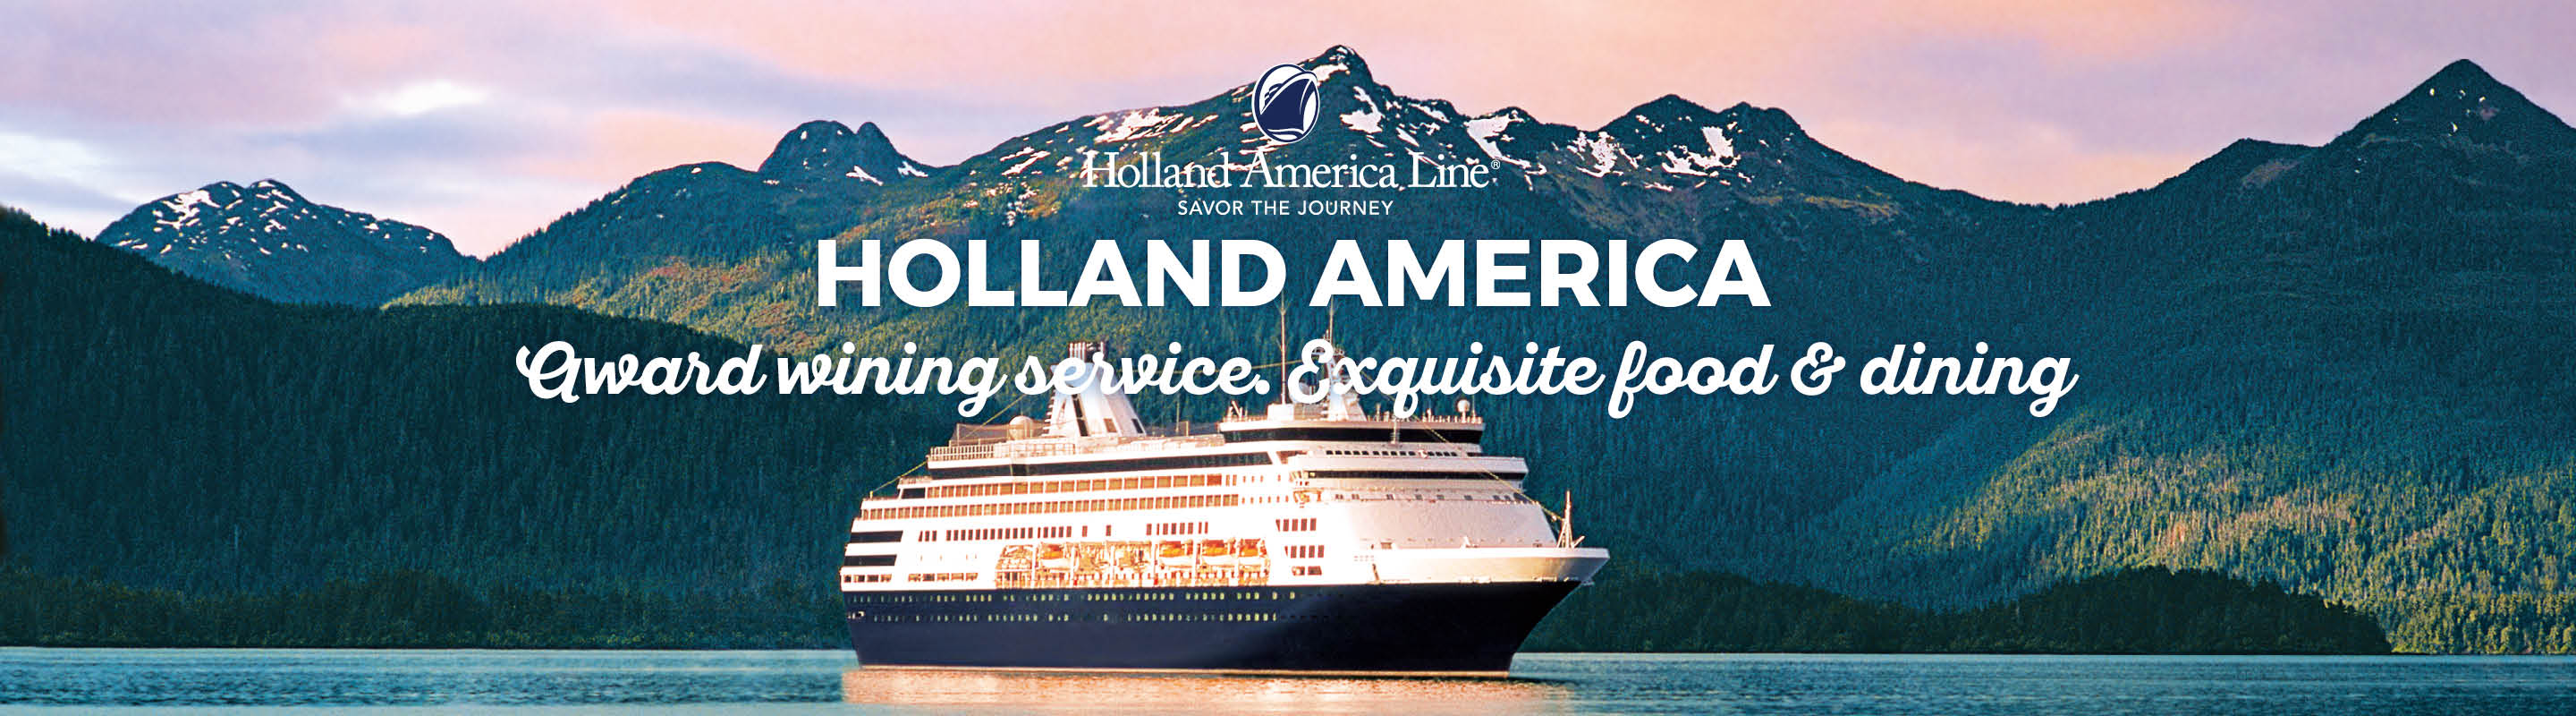 holland-america-cruise-offers.jpg